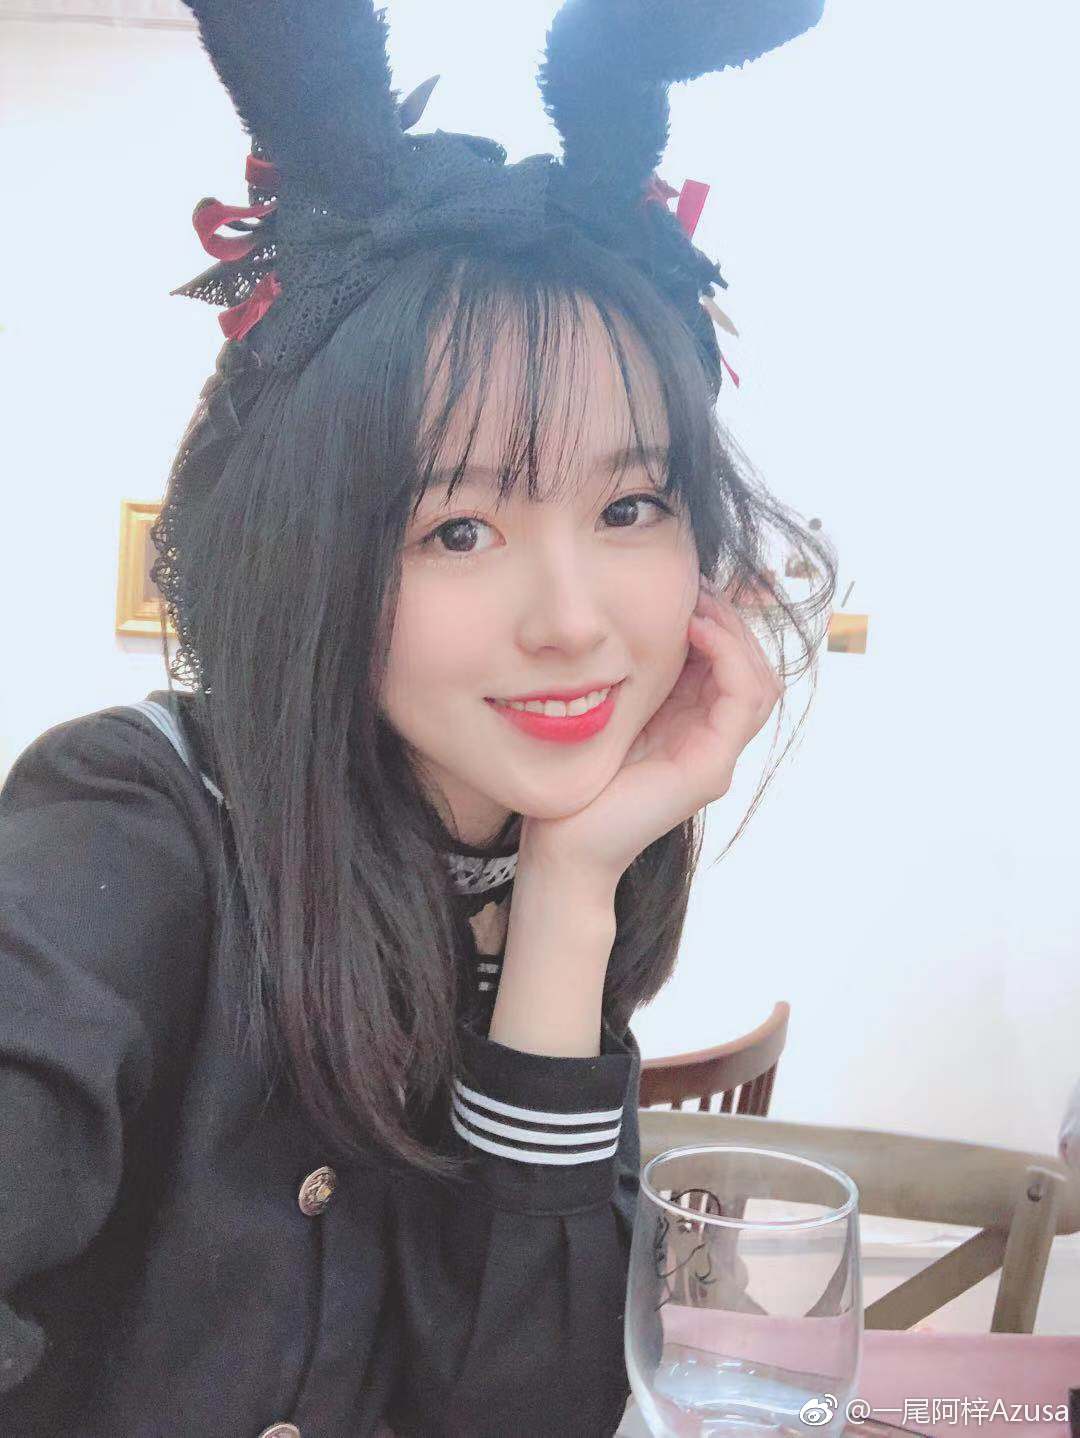 Azusa Weibo may 157, 2019